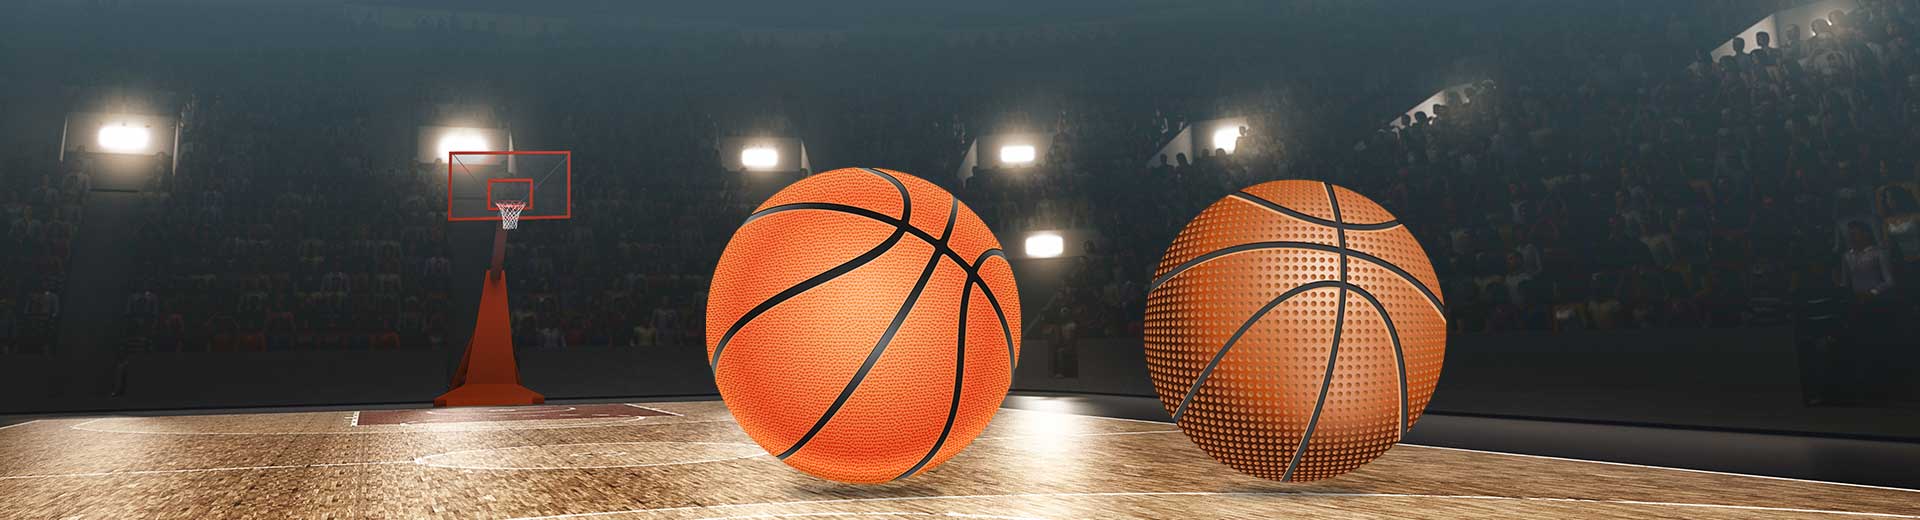 Basketballs Manufacturers in Fermont